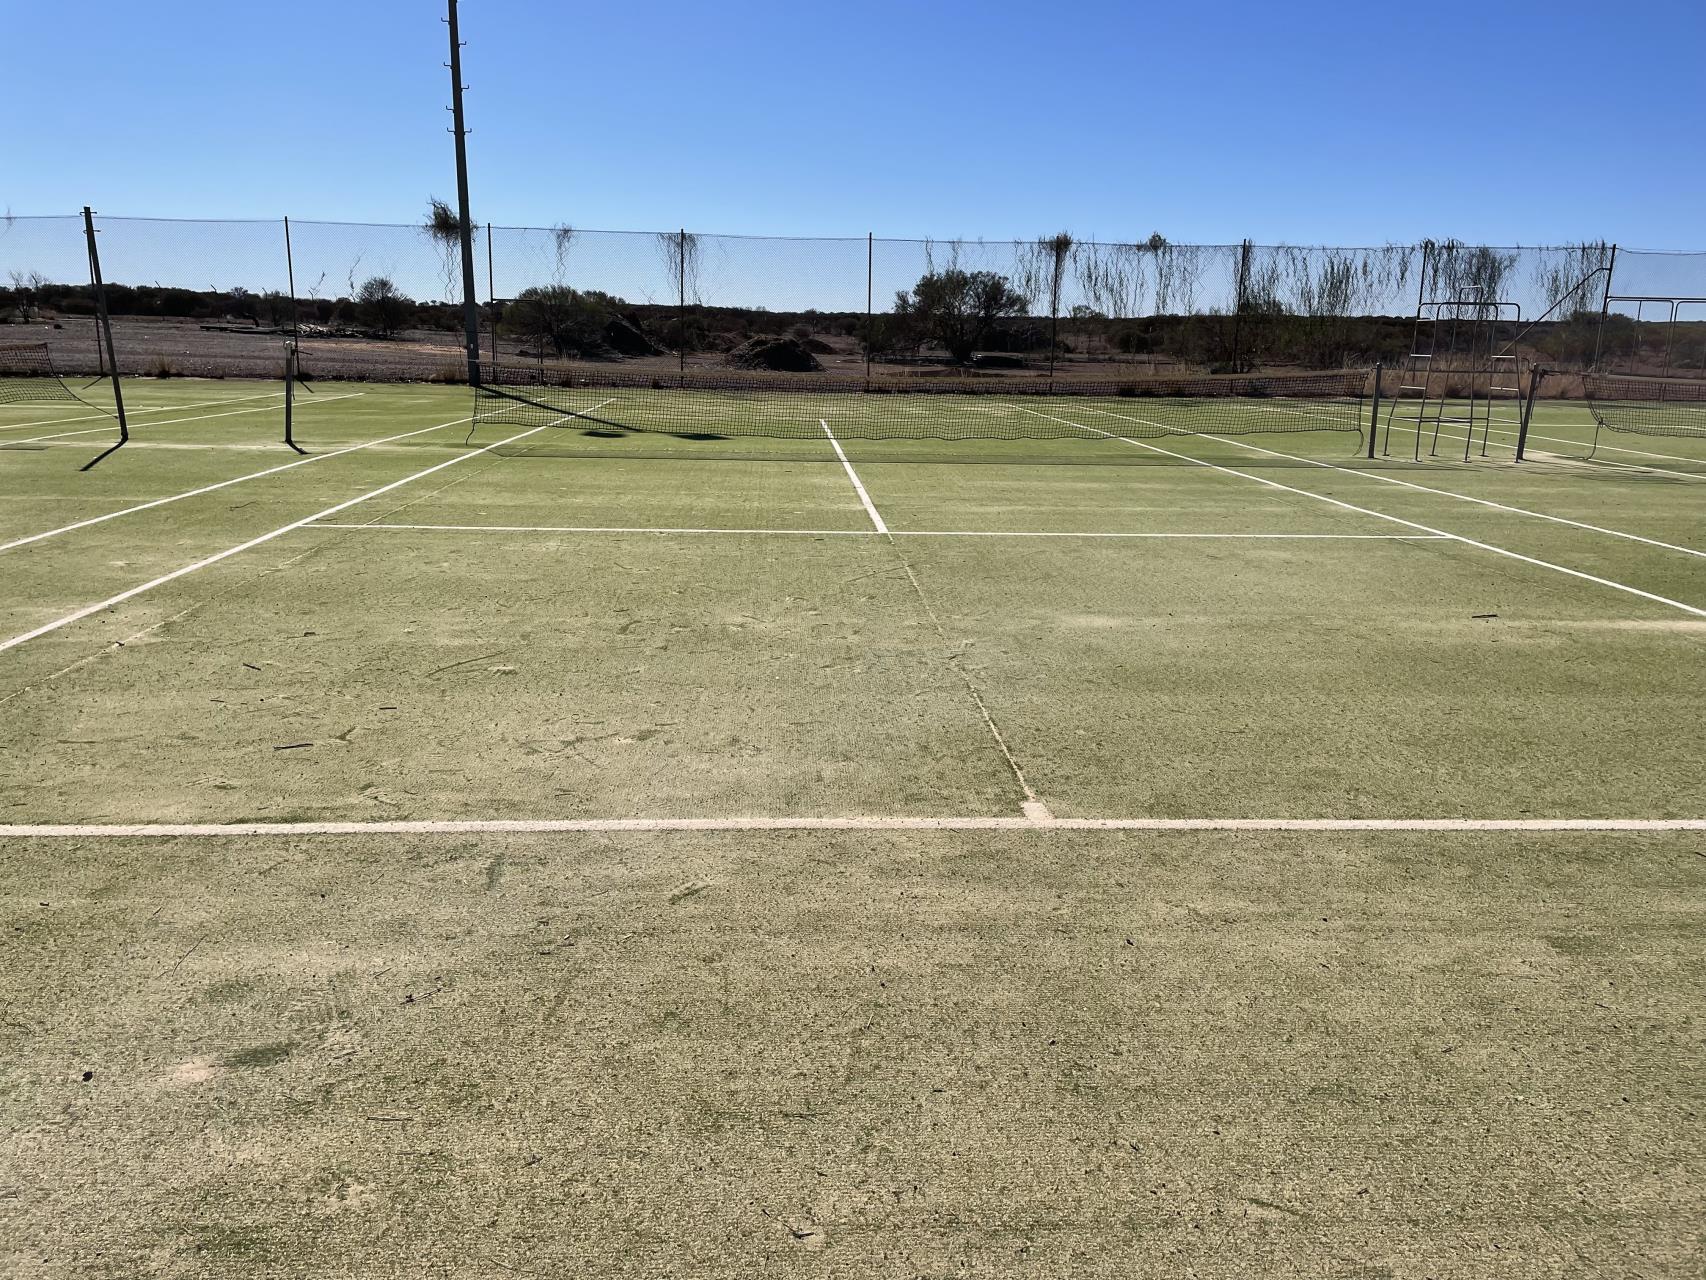 Tennis Court Image